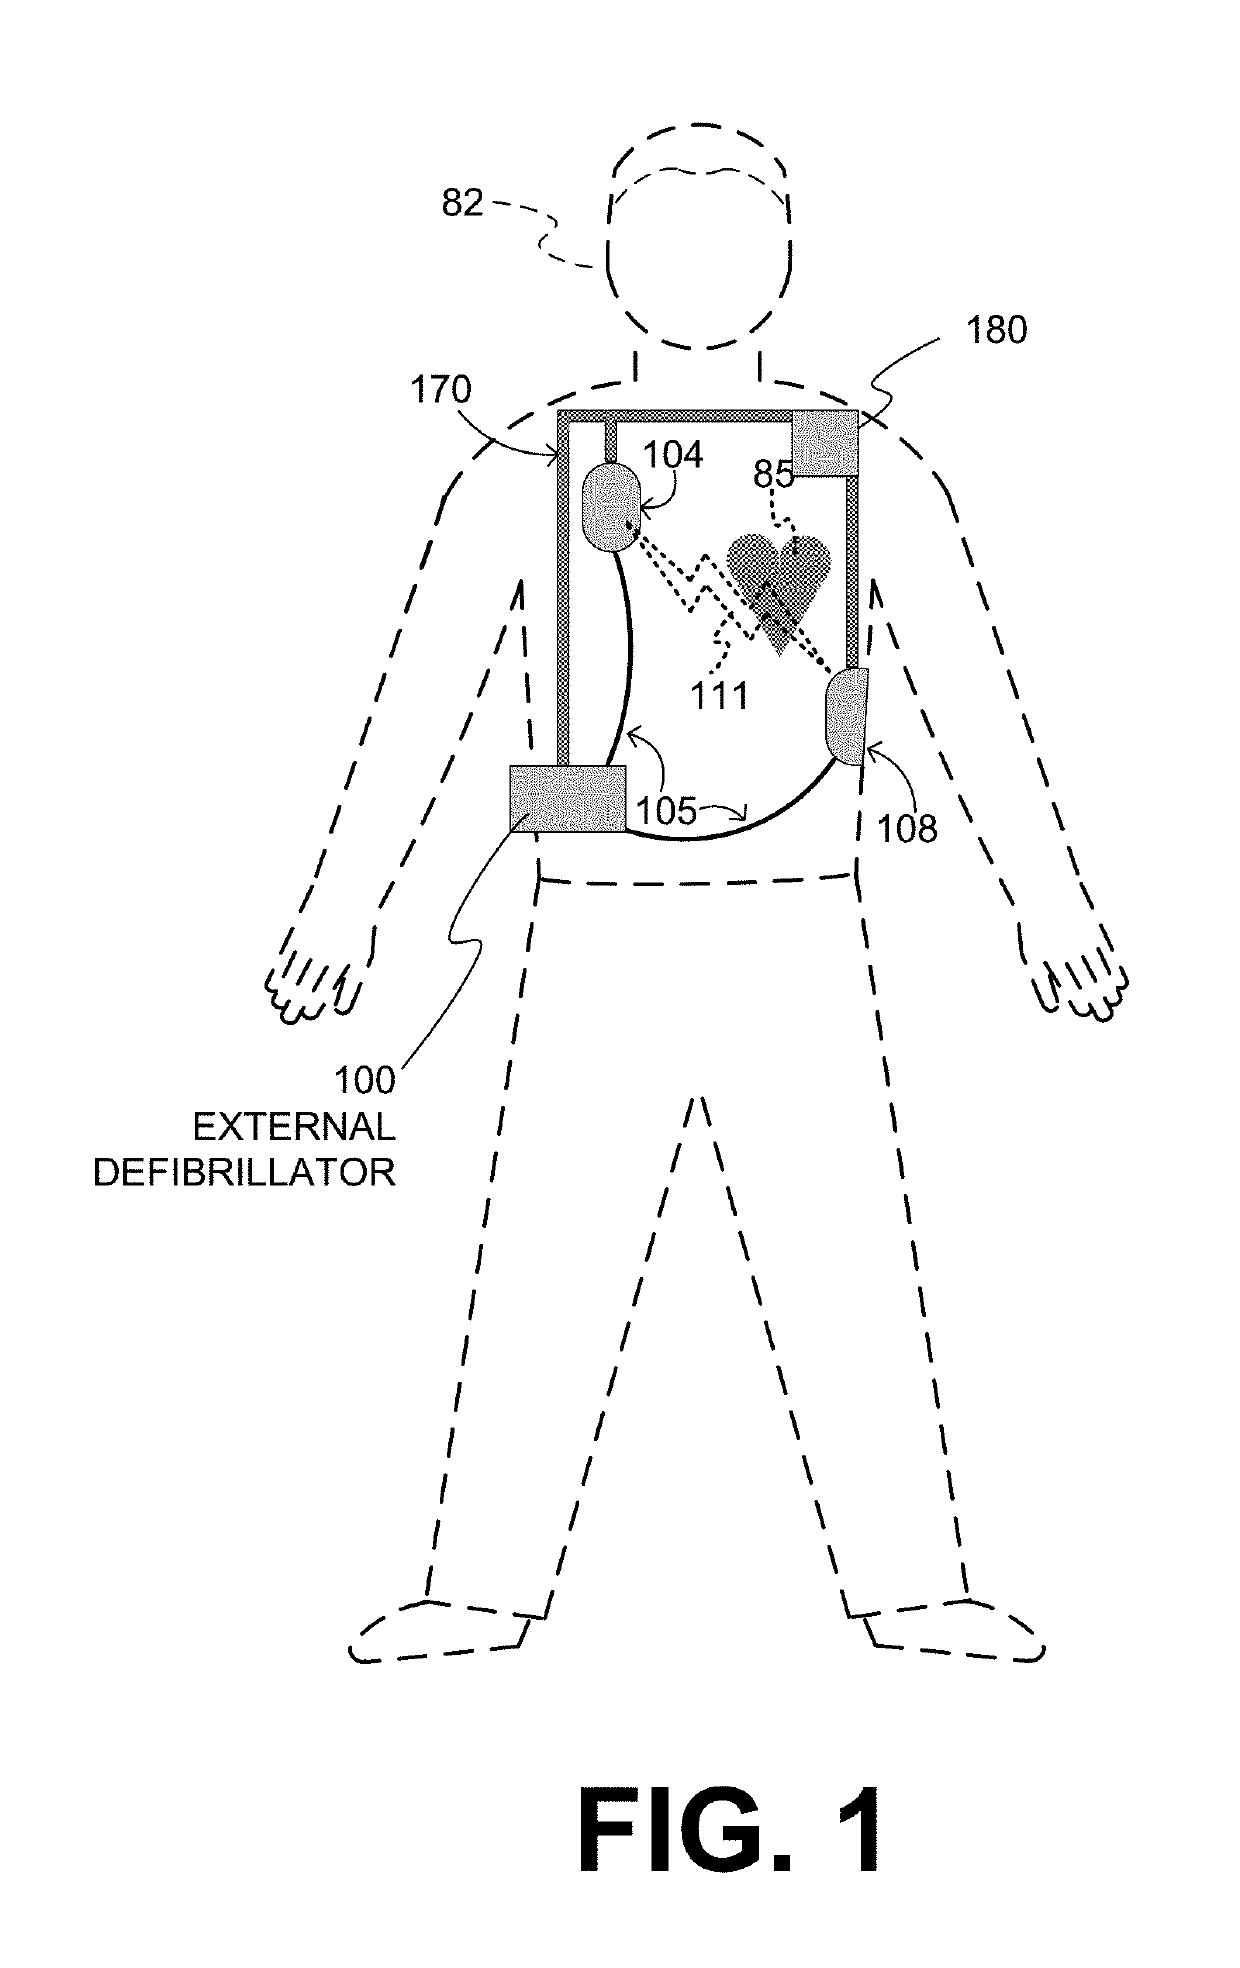 Wearable cardioverter defibrillator with improved ECG electrodes